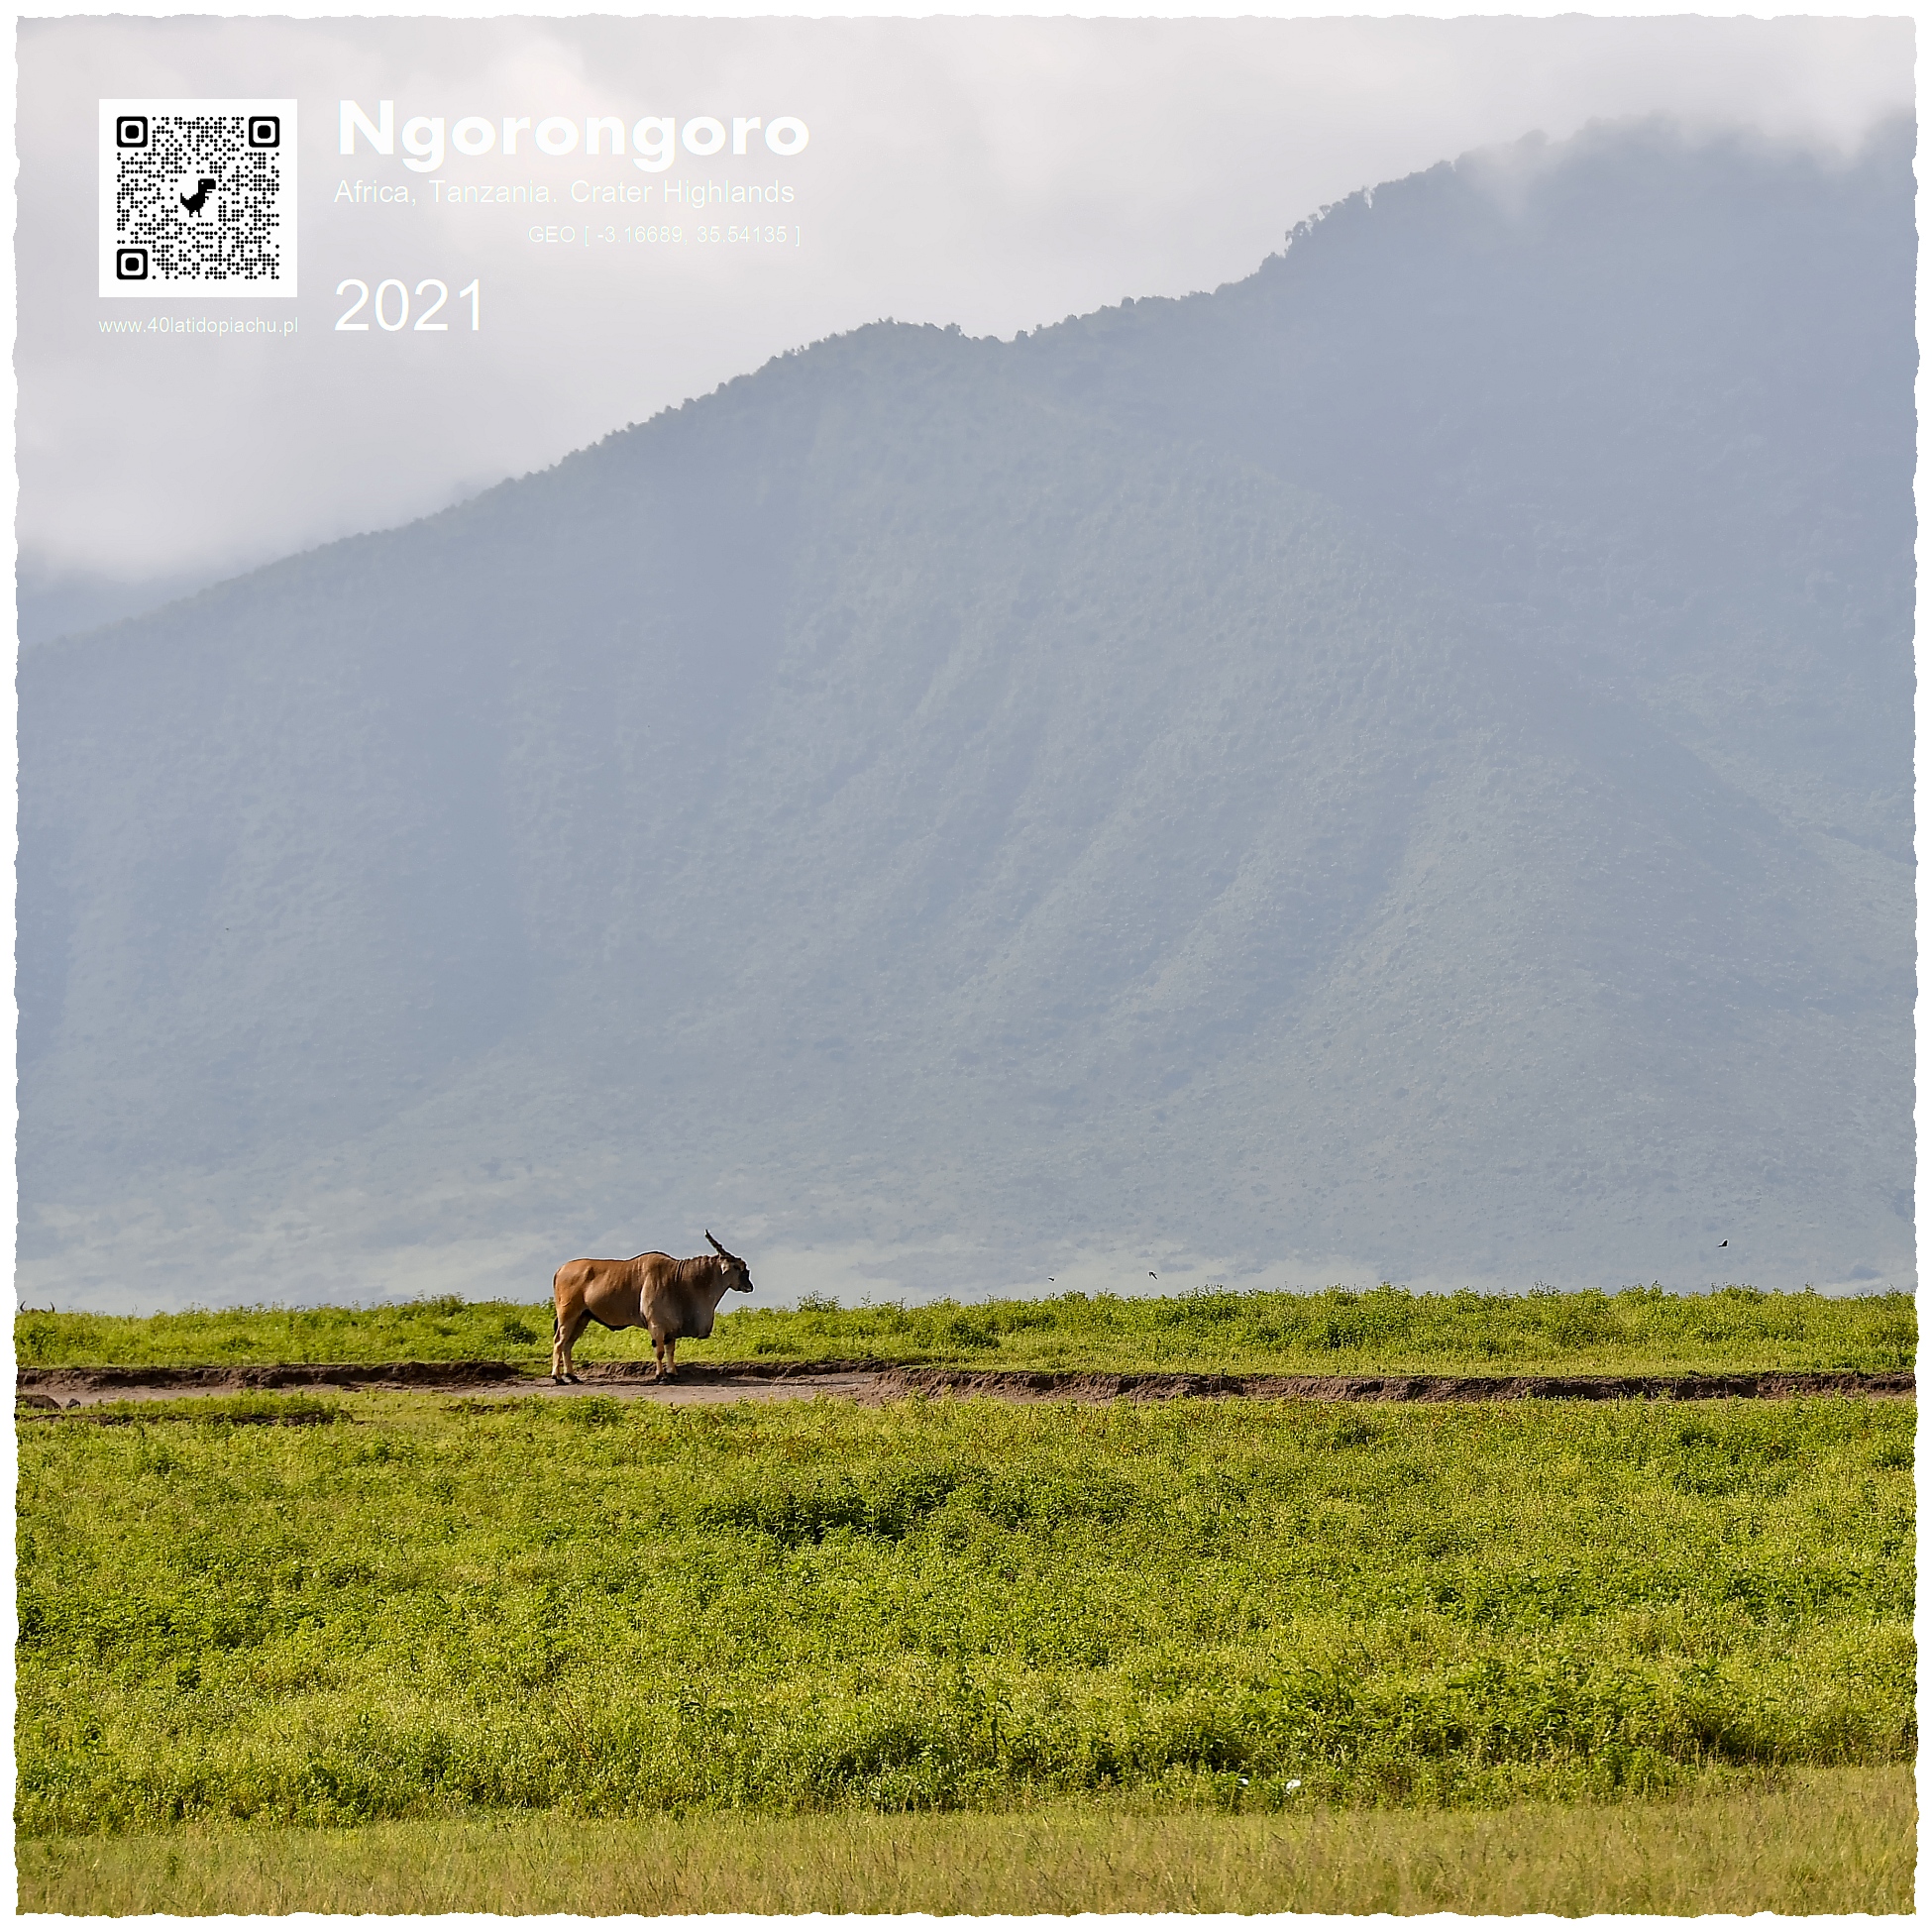 Tanzania UNESCO Park Ngorongoro